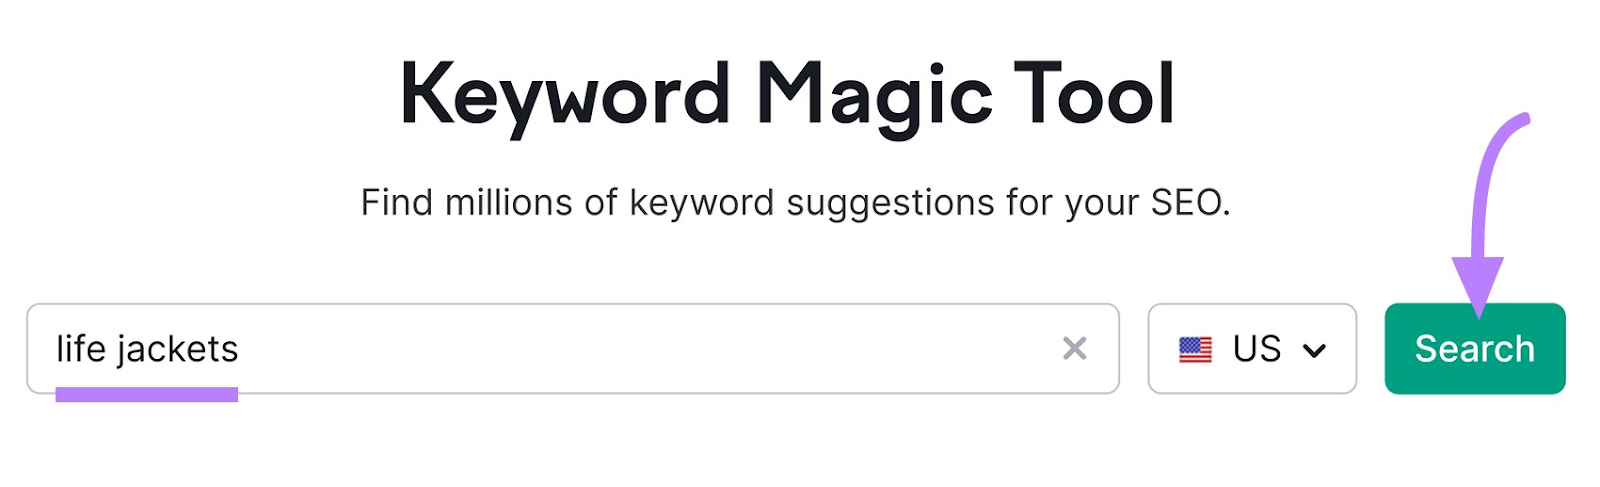 "gilets de sauvetage" saisis dans la barre de recherche de Keyword Magic Tool